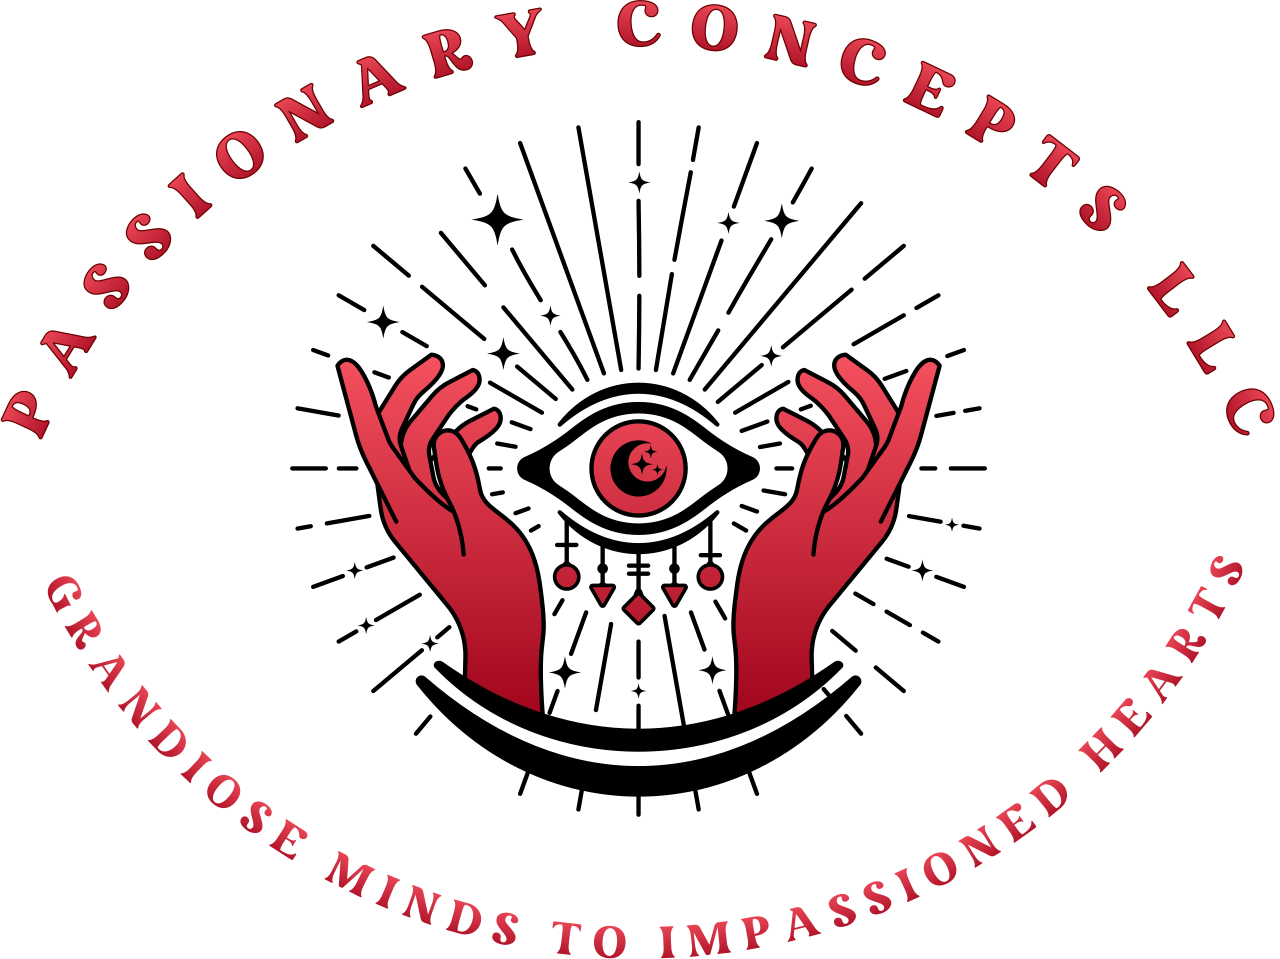 PASSIONARY CONCEPTS LLC's logo